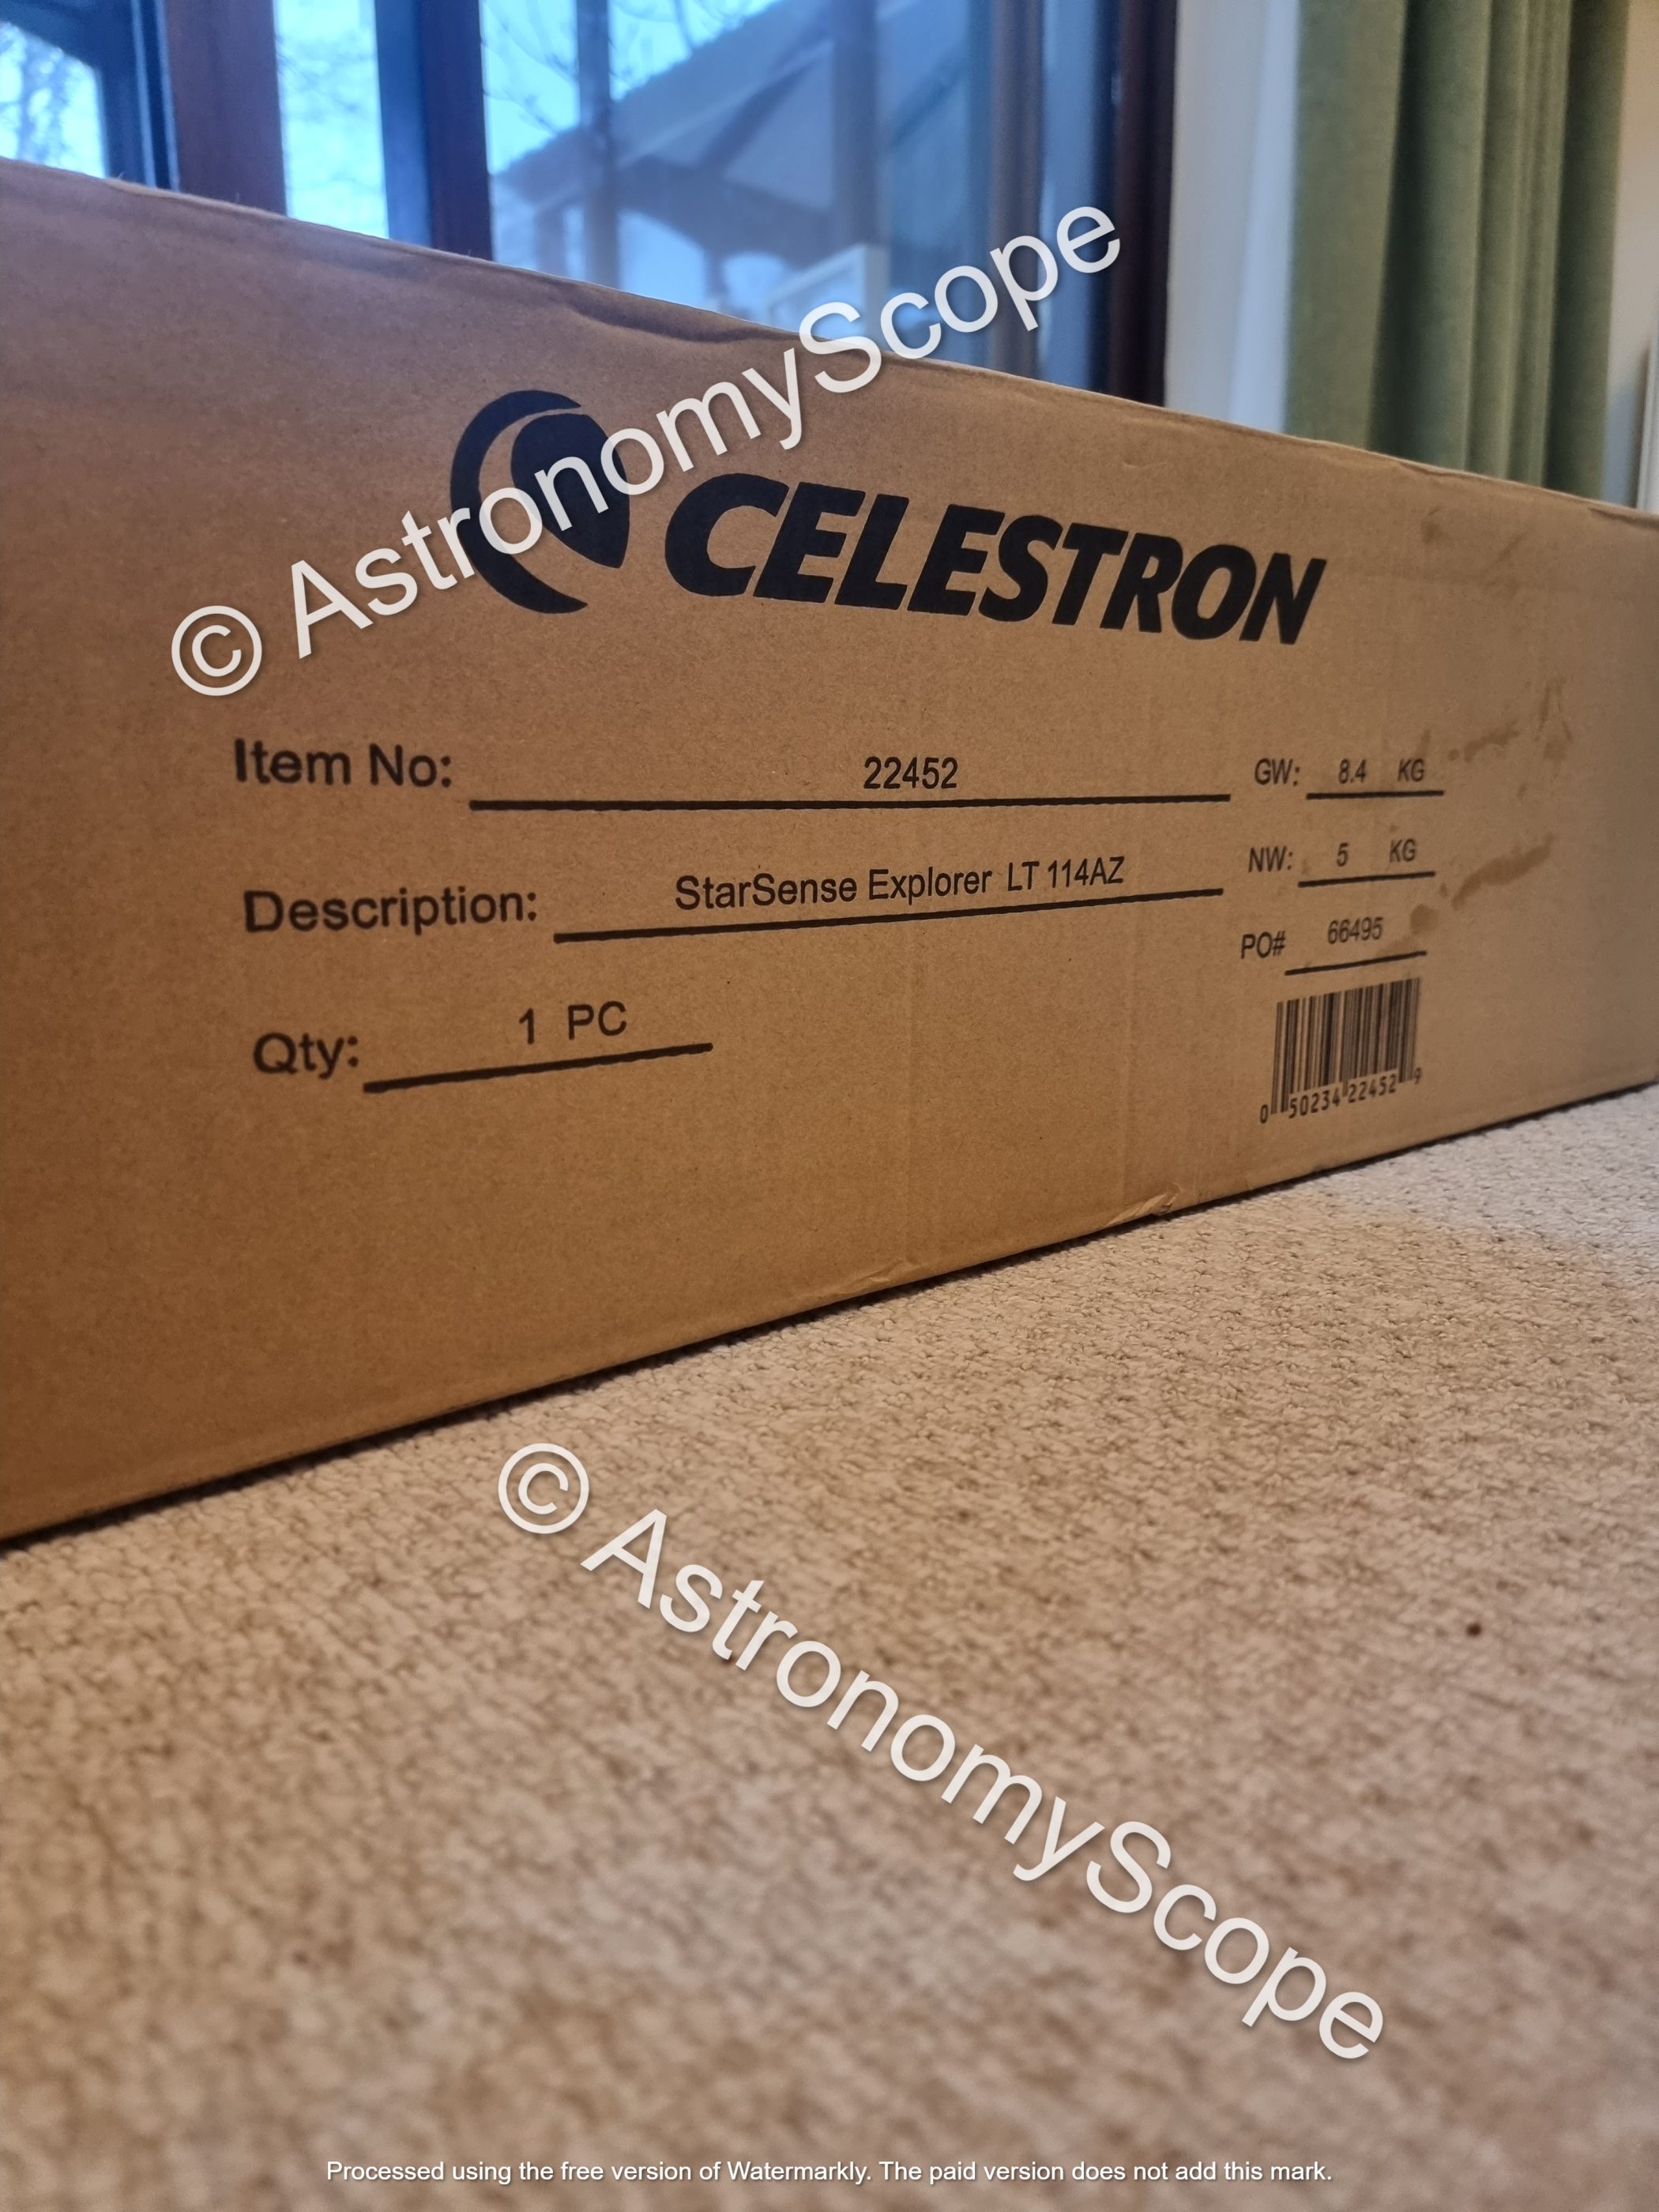 Celestron StarSense Explorer LT 114AZ Photo of Box